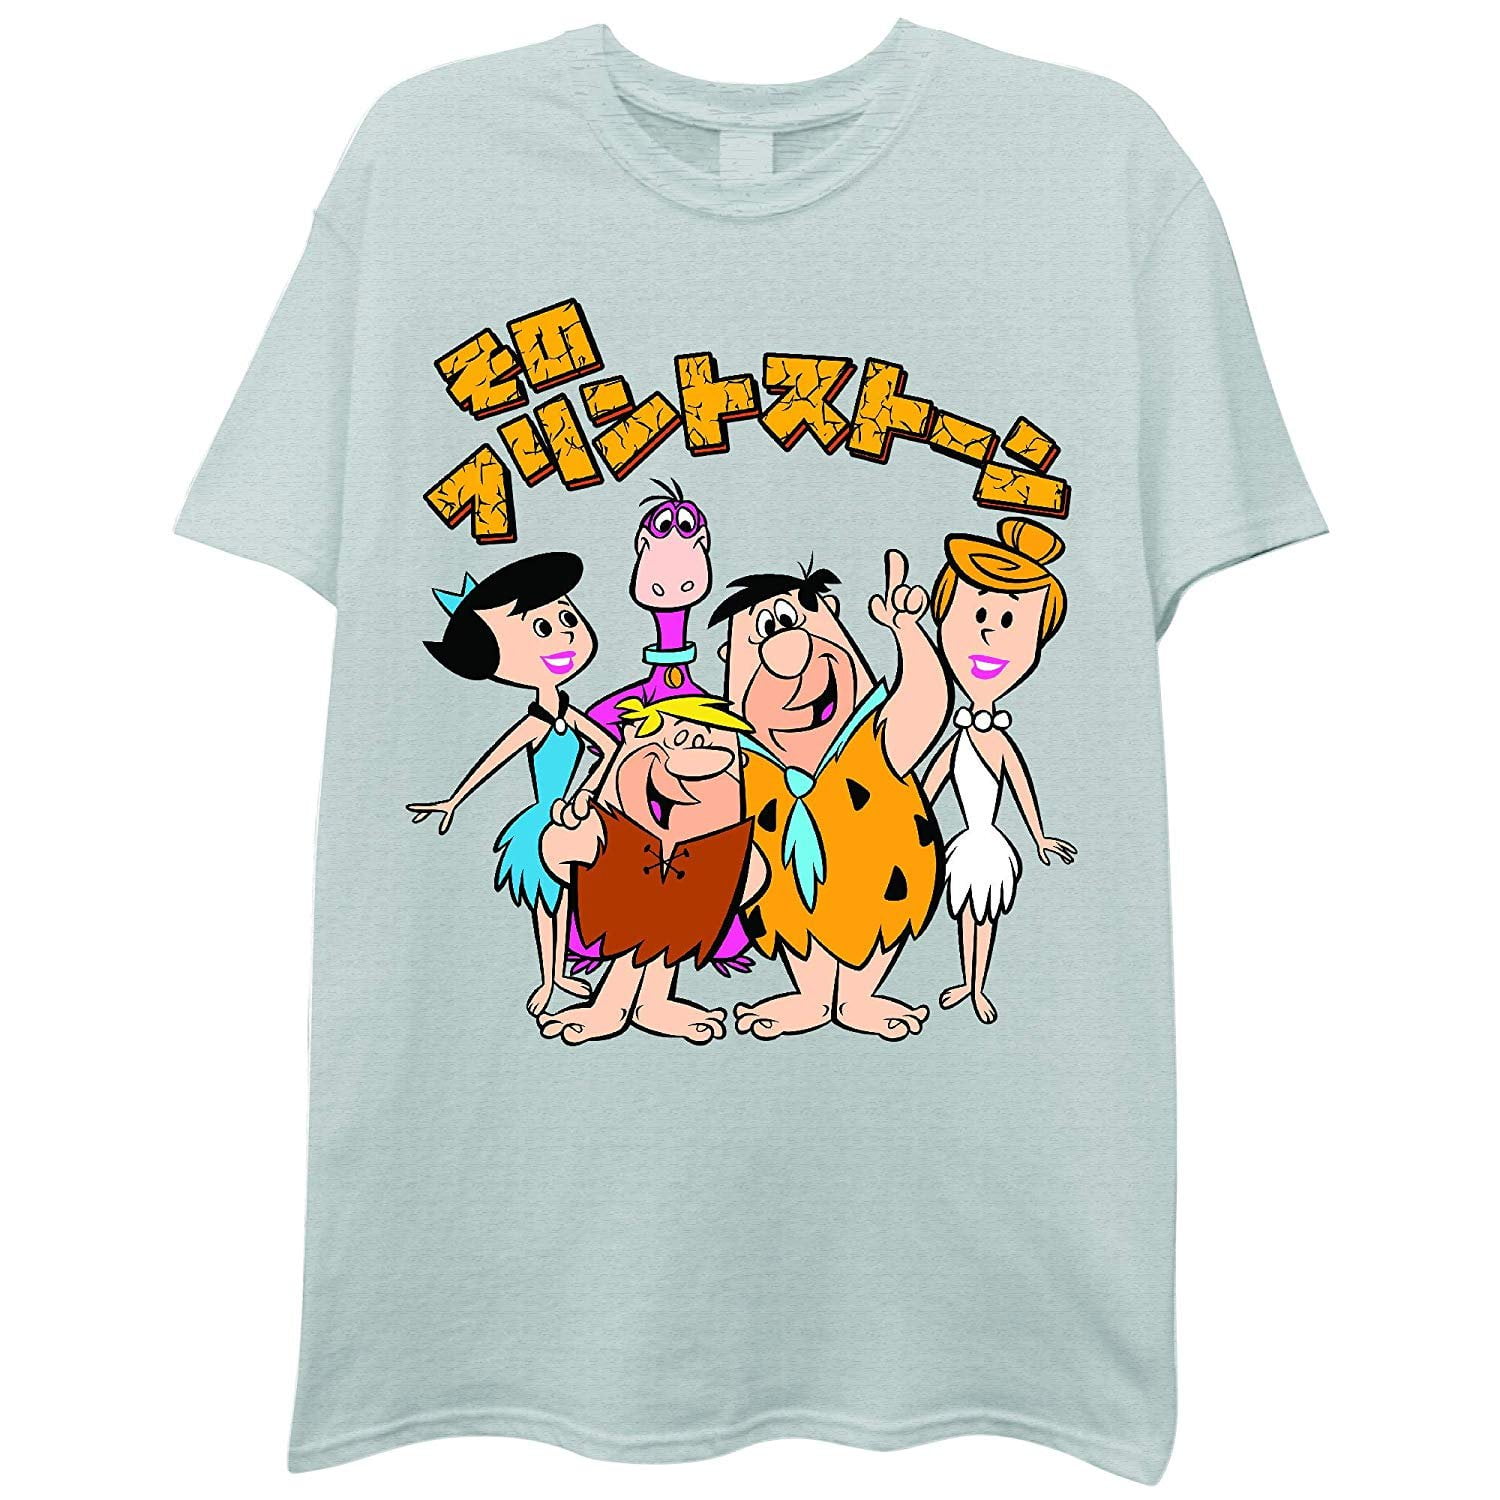 Flinstones The - - T-Shirt Hanna-Barbera Heather Classic Mens Fred Classic Flintstones Large Tee Shirt Grey, Vintage